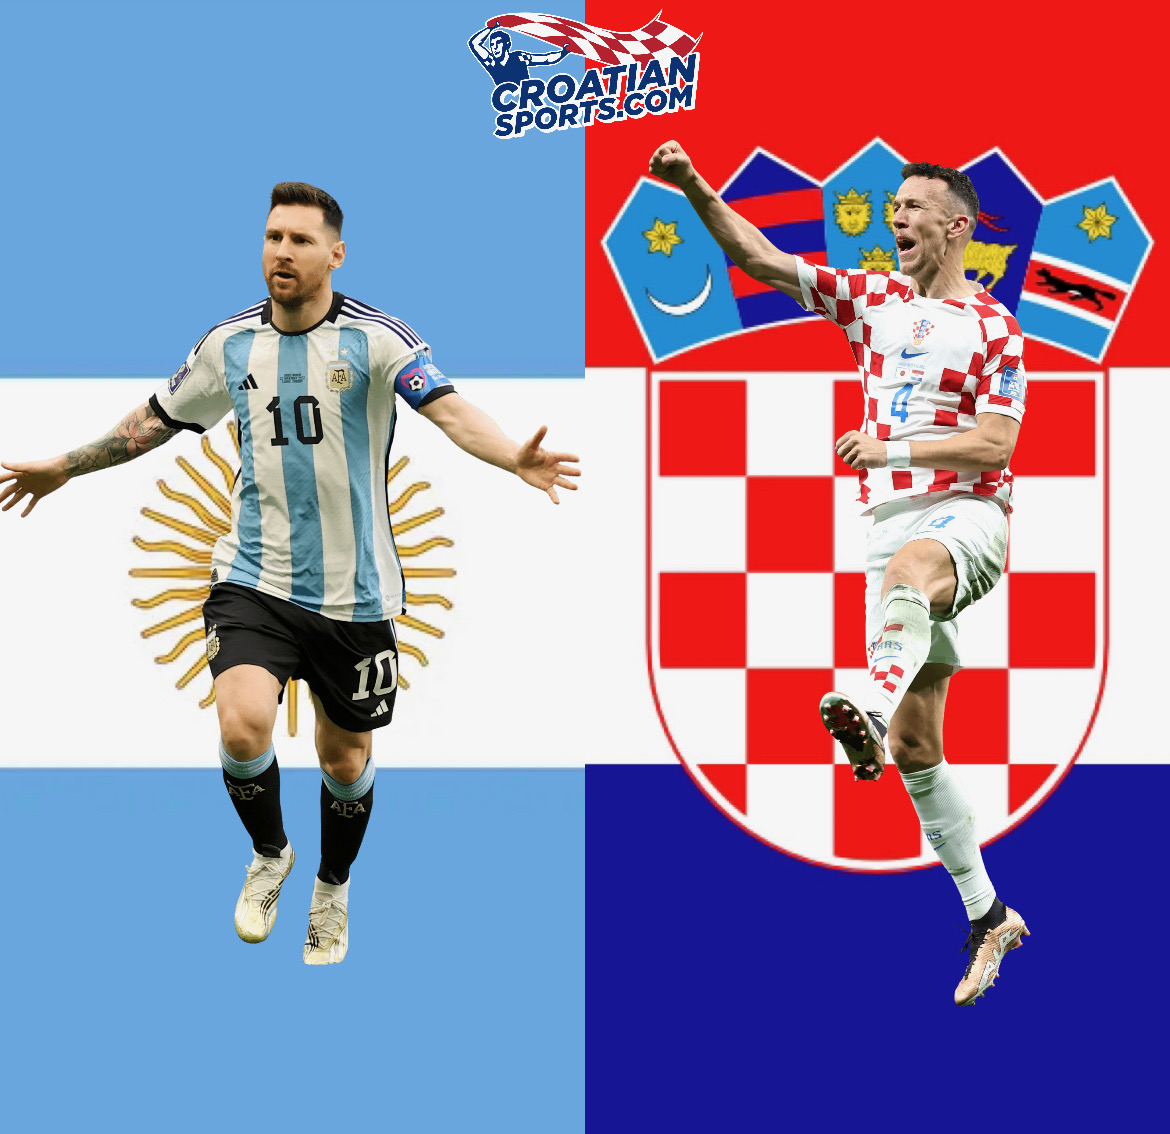 OFFICIAL: Croatia vs. Argentina World Cup Semifinal!